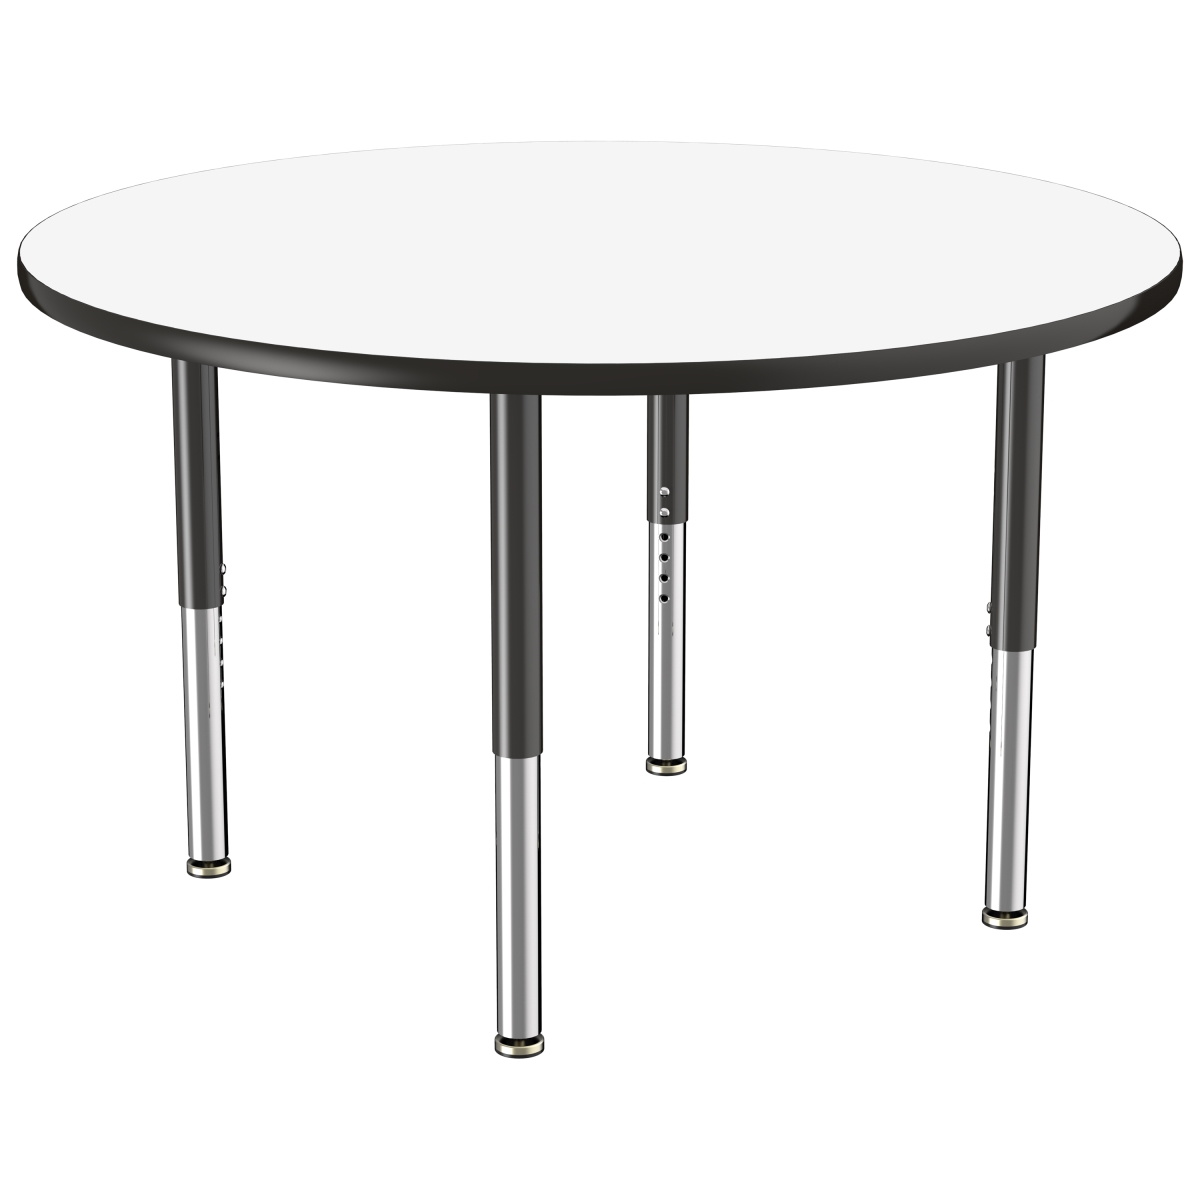 10199-debk 48 In. Round Dry-erase Adjustable Activity Table With Super Leg - Black